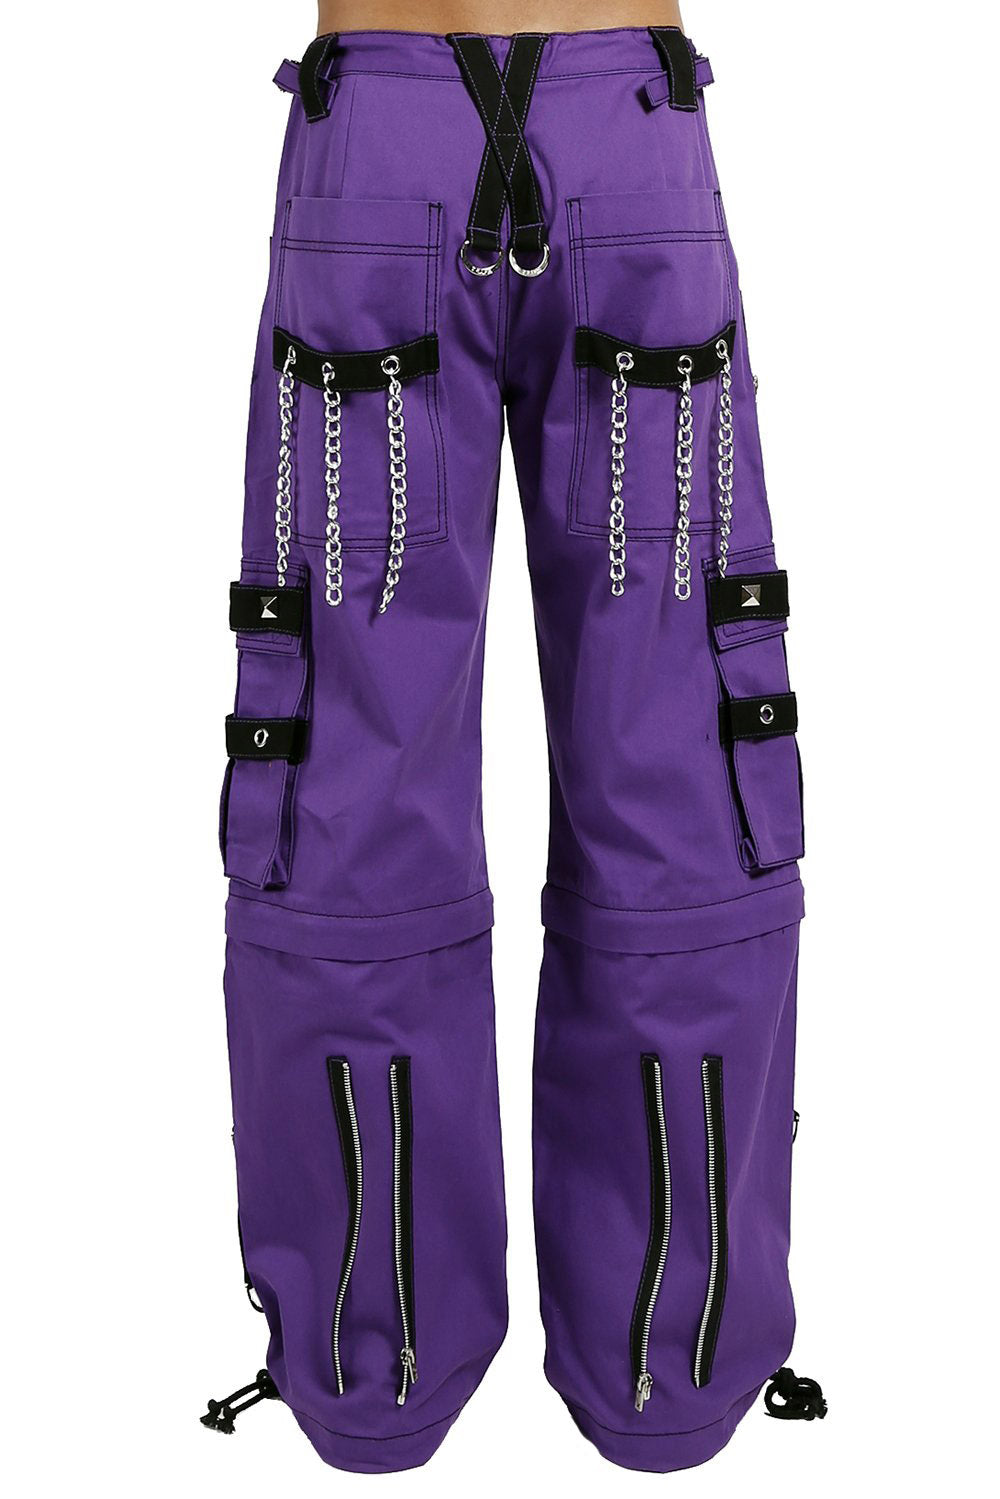 Vintage Velour Purple Pants / High Waisted 70's Pants / Deep purple Pants /  Retro Clothing / Madmen Fashion